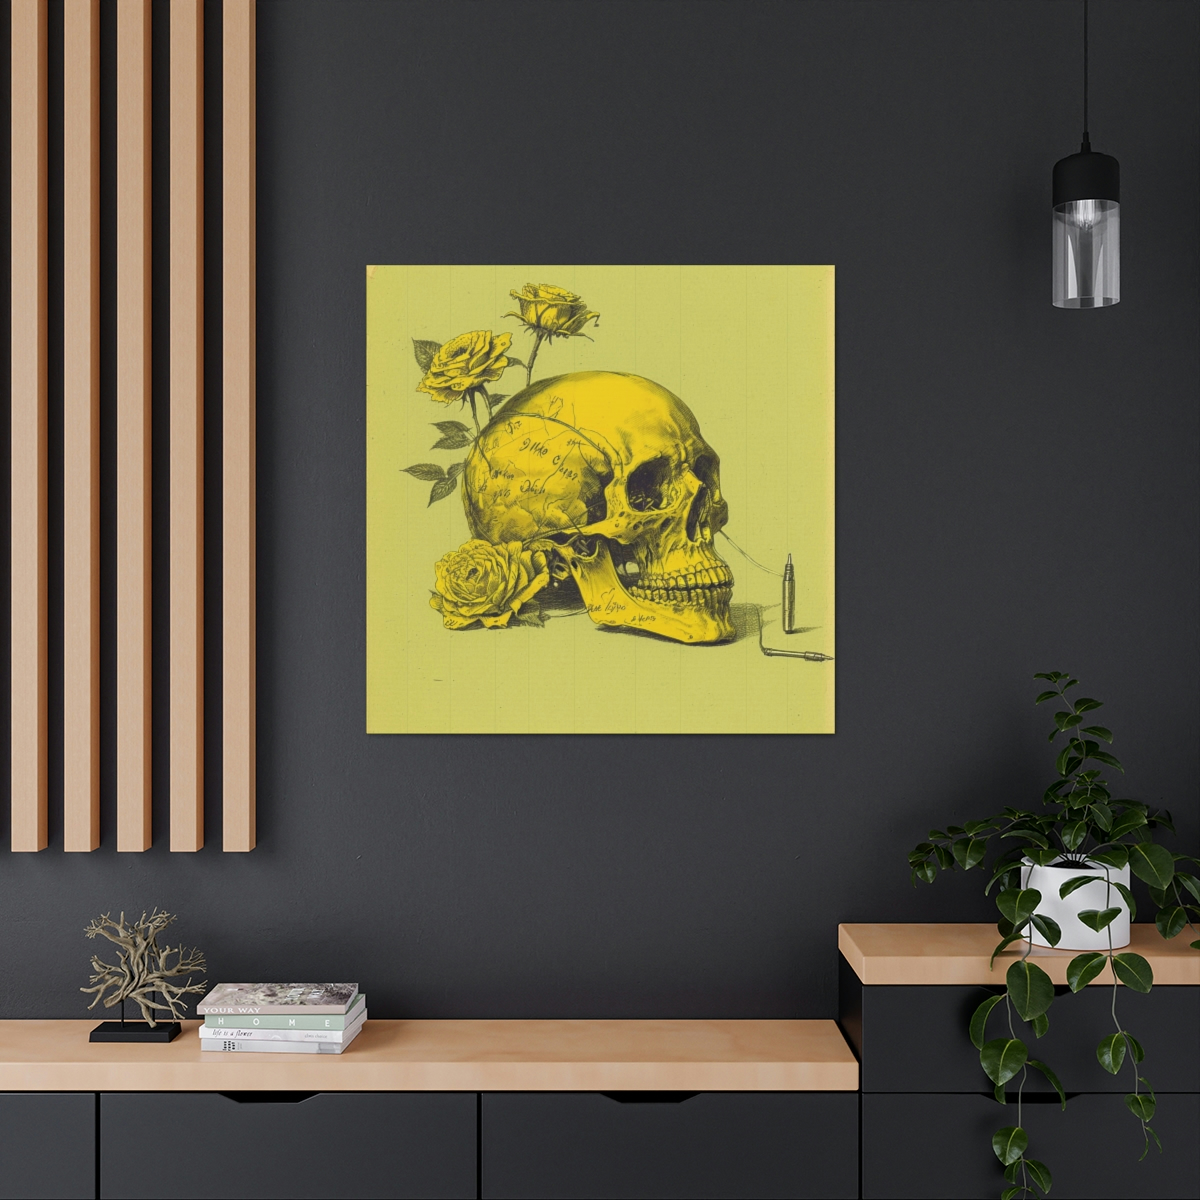 Skull Art Canvas Prints: Skull And Roses